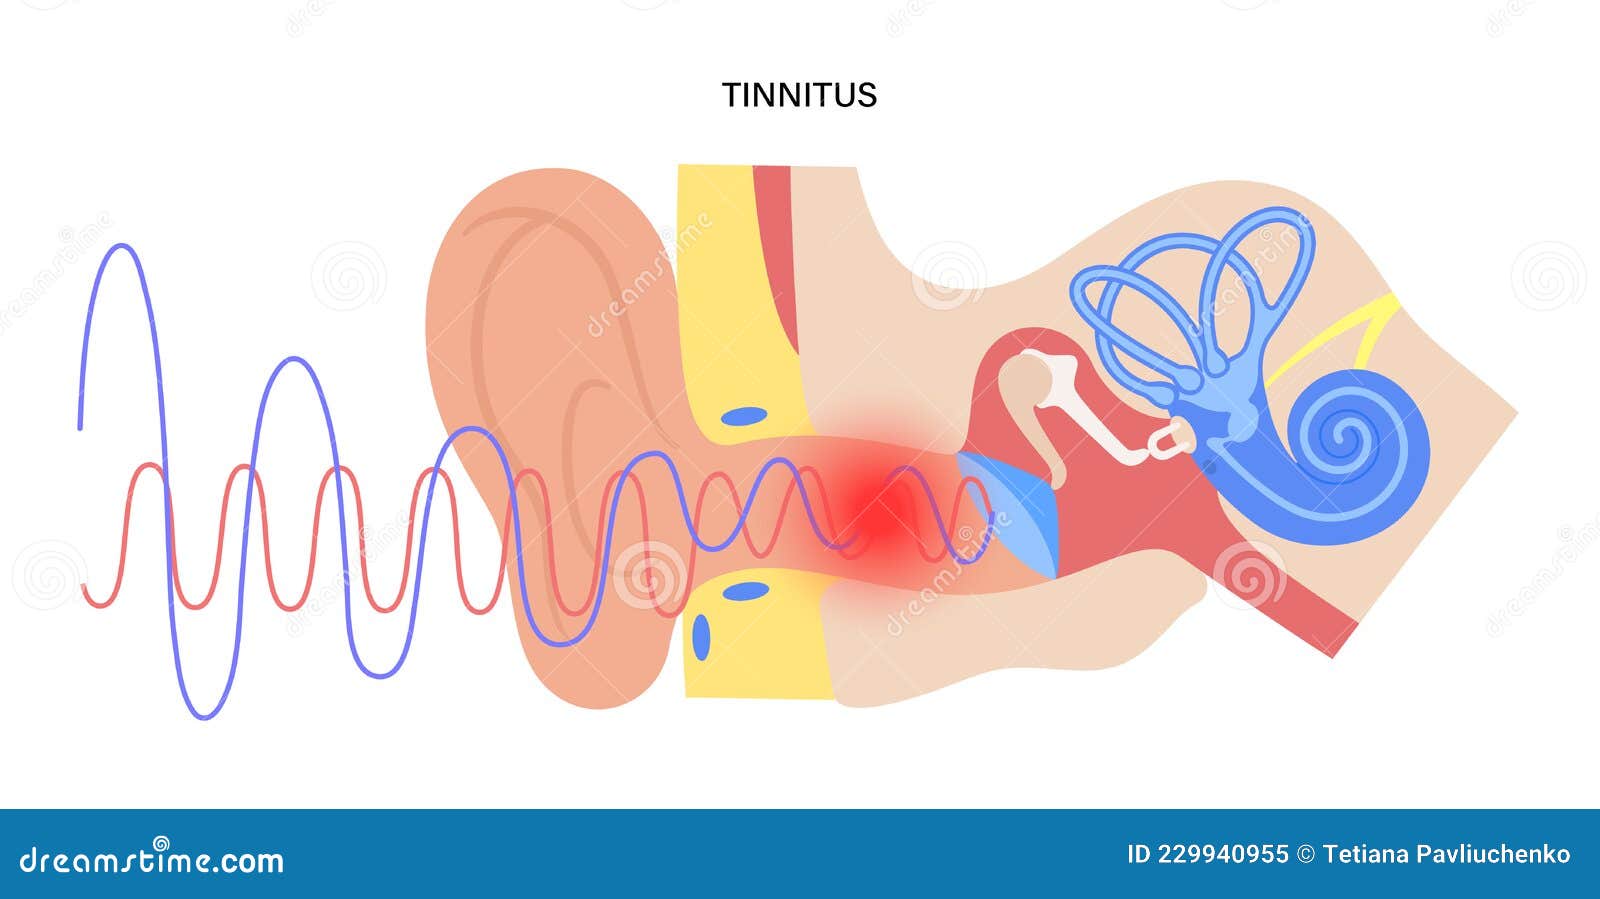 tinnitus disease concept